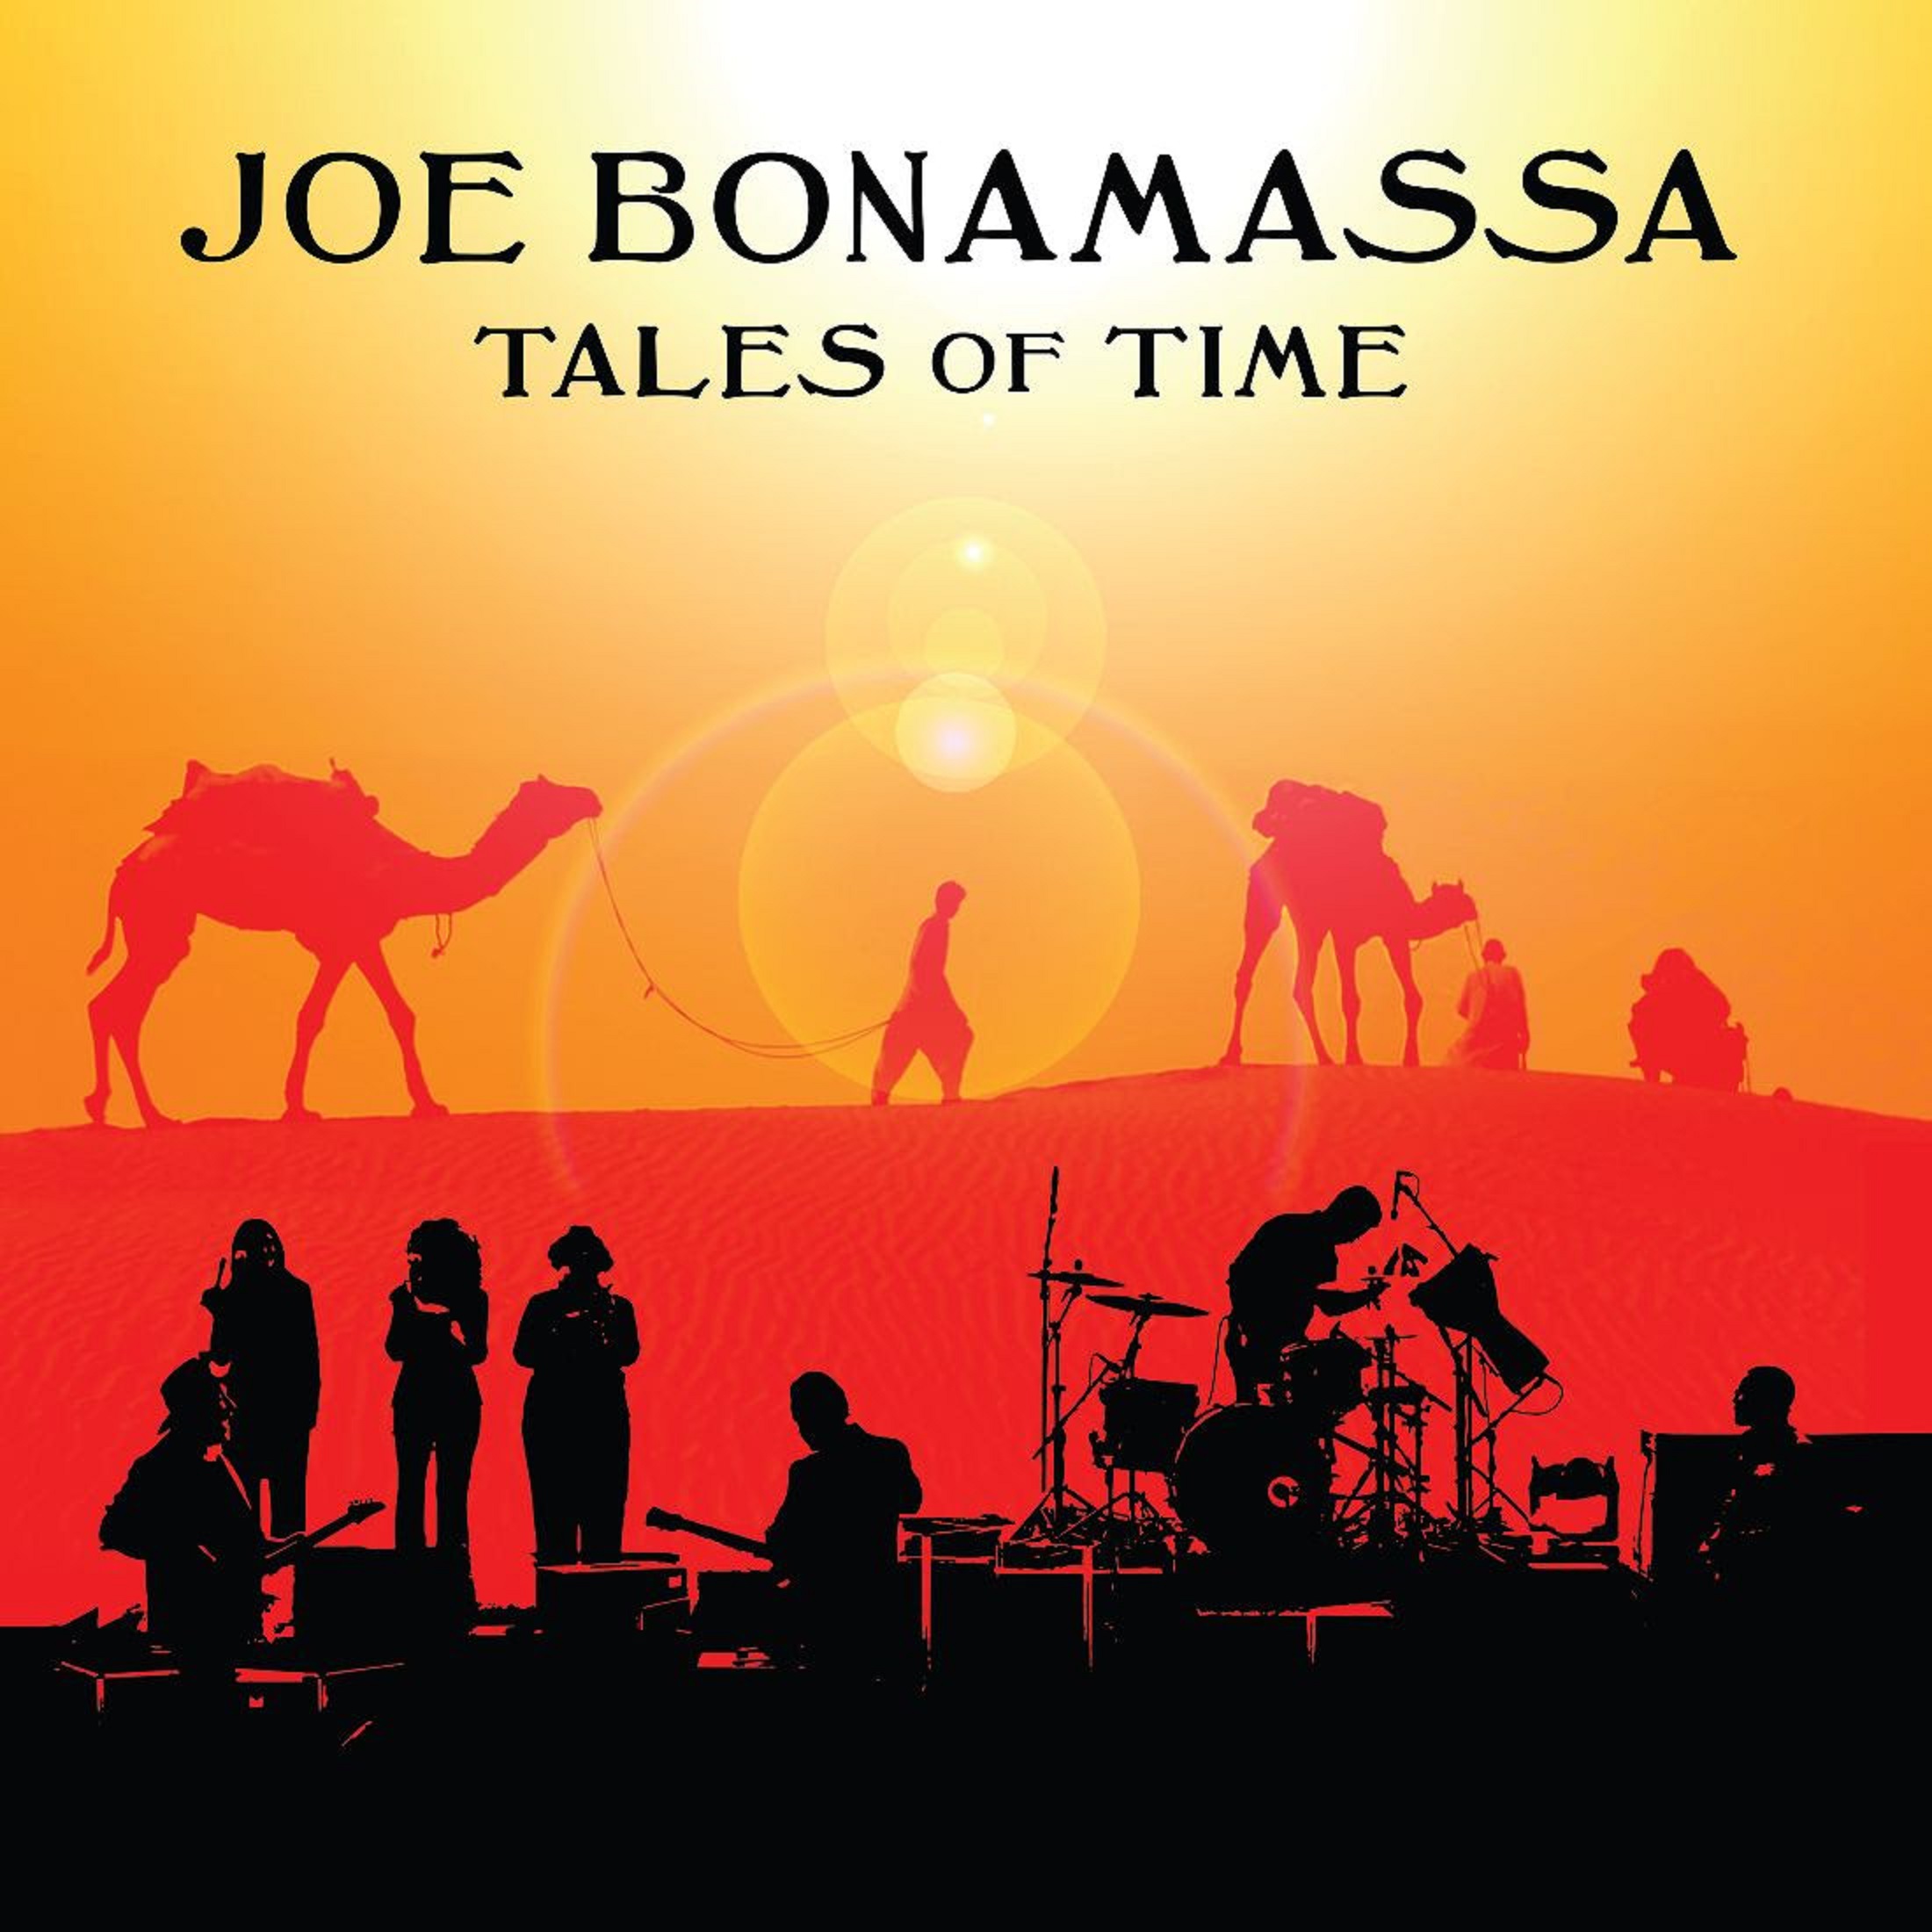 Joe Bonamassa to Release Groundbreaking Performance From Red Rocks Amphitheatre